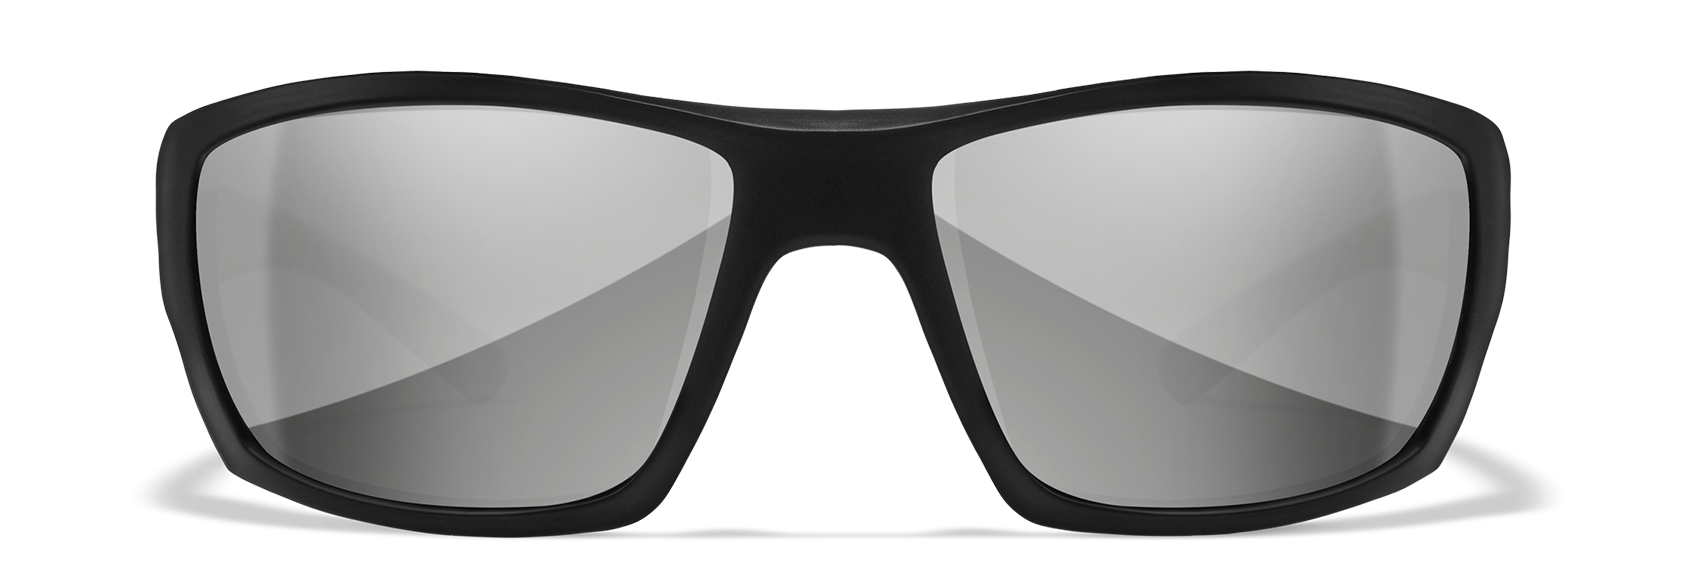 Wiley X WX Kobe Matte Black Polycarbonate Sunglasses